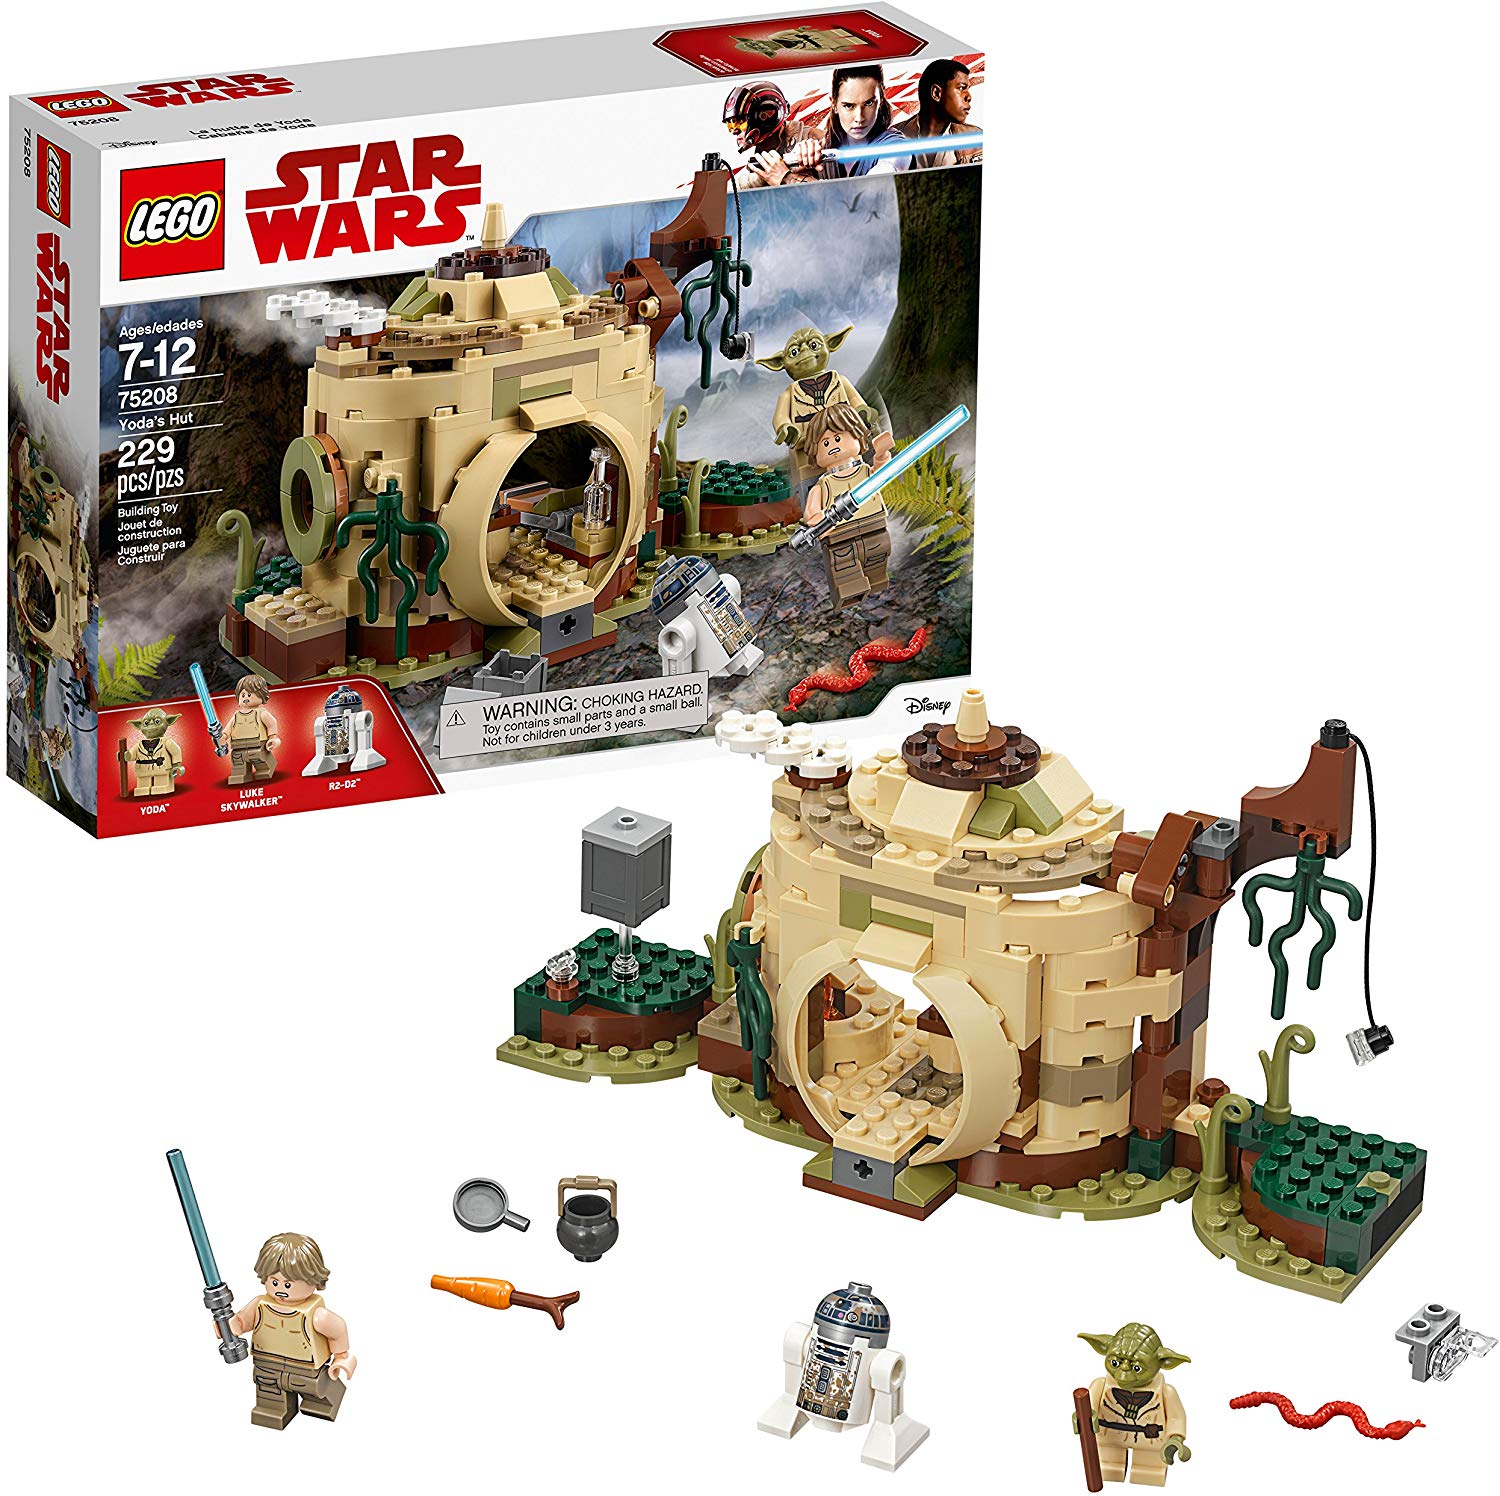 LEGO Star Wars: The Empire Strikes Back Yoda's Hut 75208 Buildin g Kit (1 P